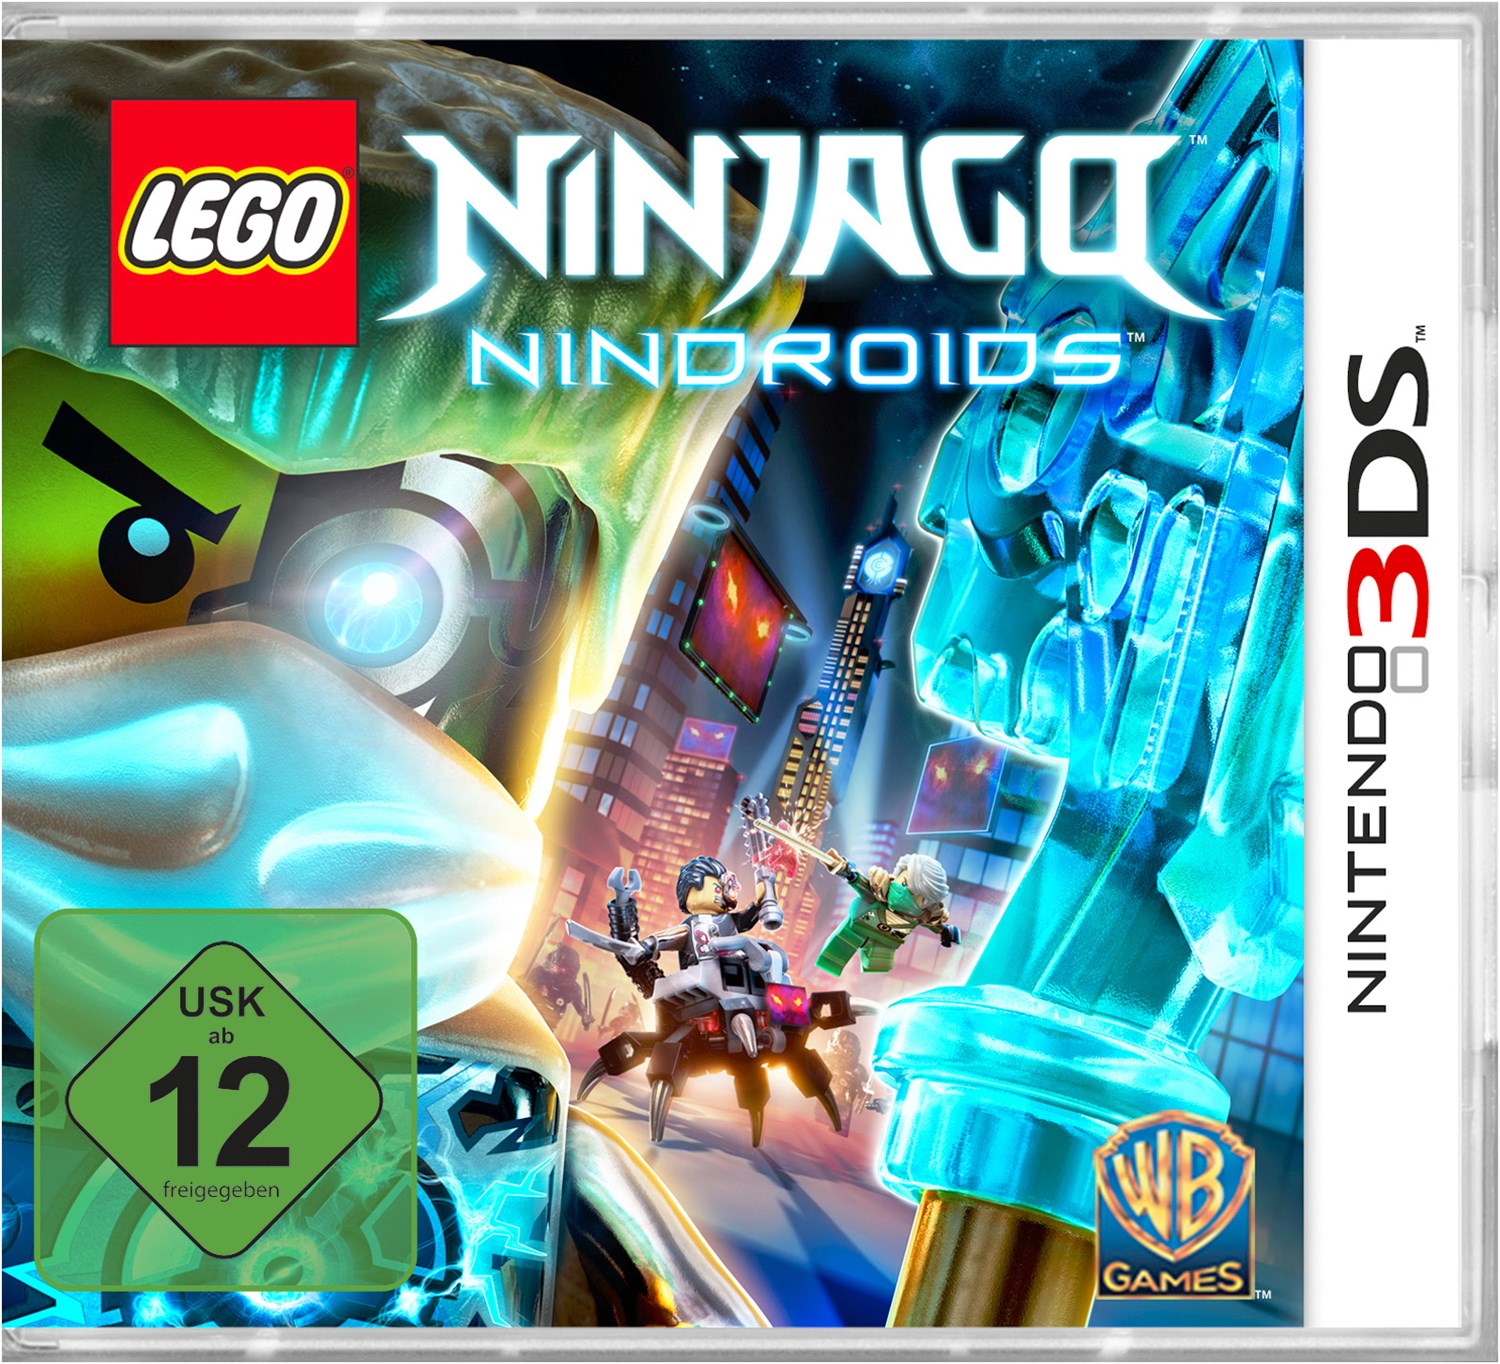 software pyramide 3ds lego ninjago: nindroids